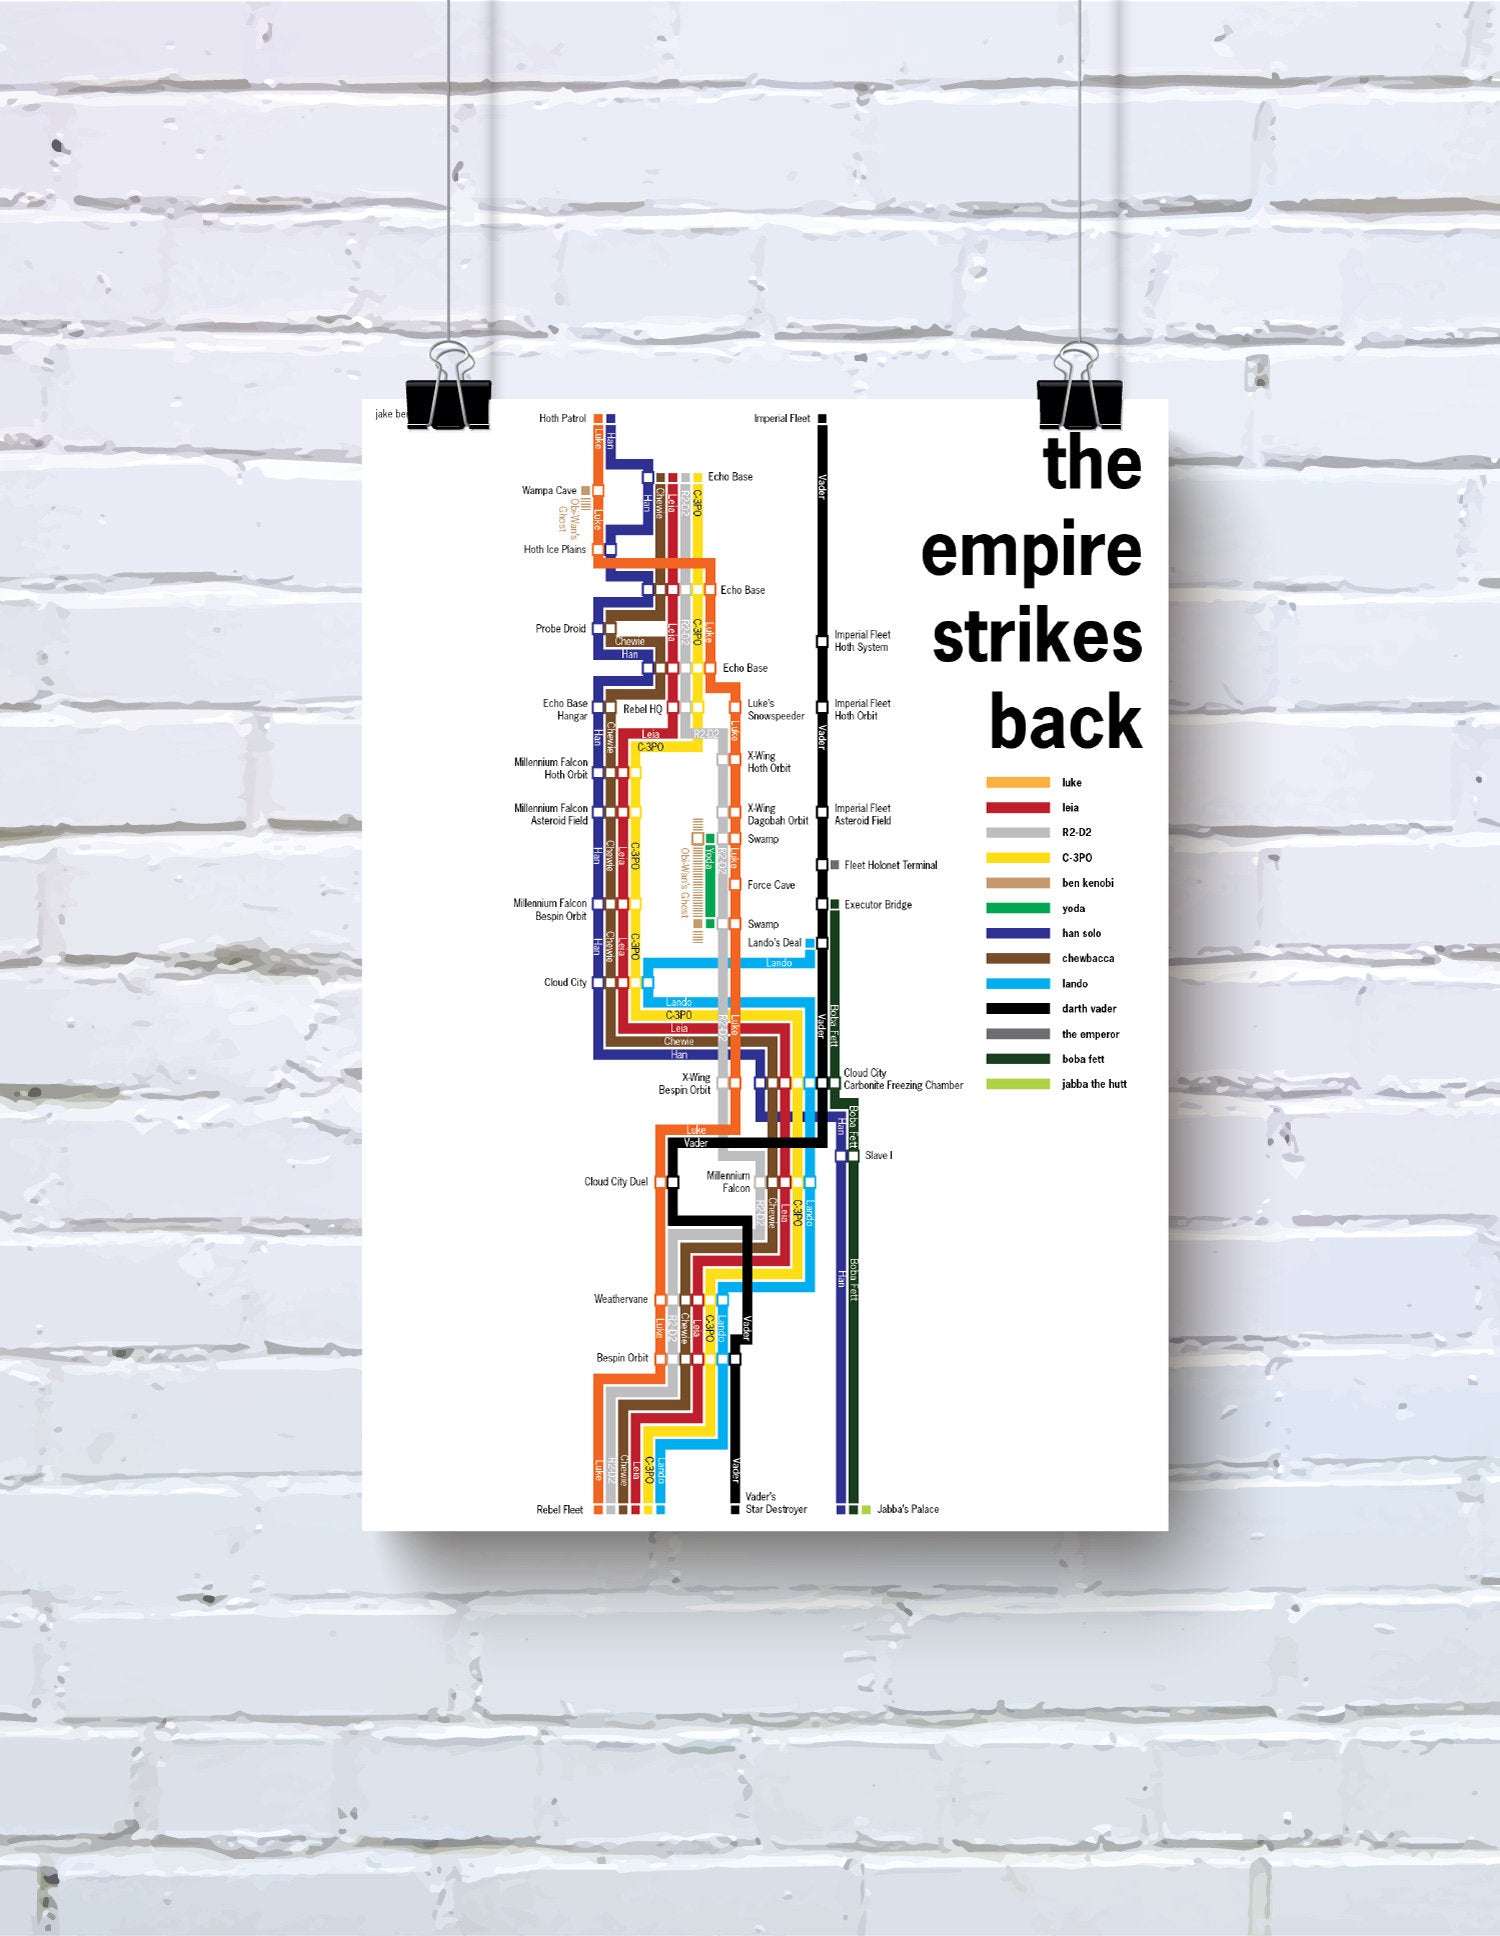 Star Wars: The Empire Strikes Back timeline poster